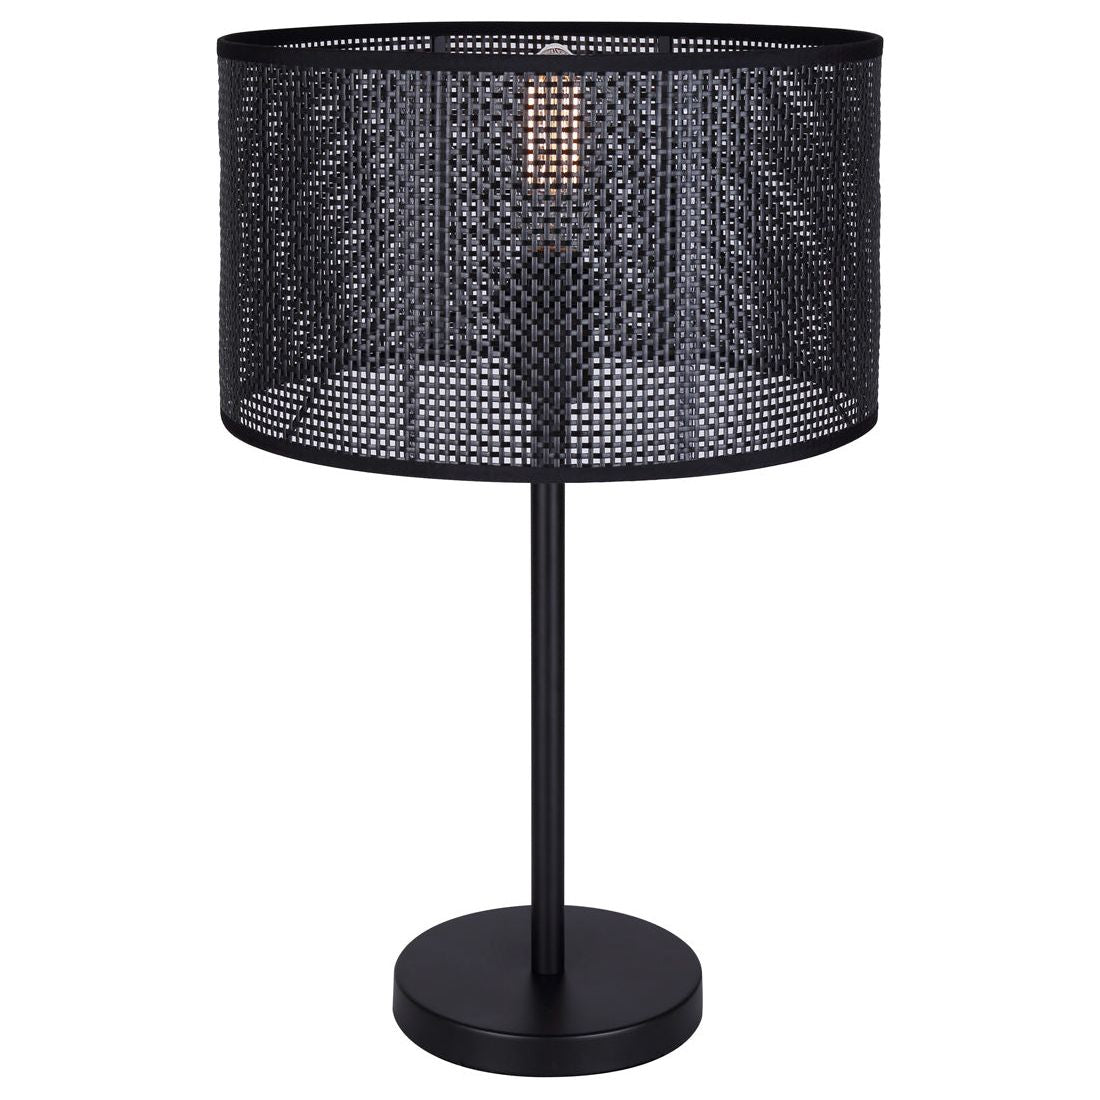 Bellamy 1-Light Table Lamp